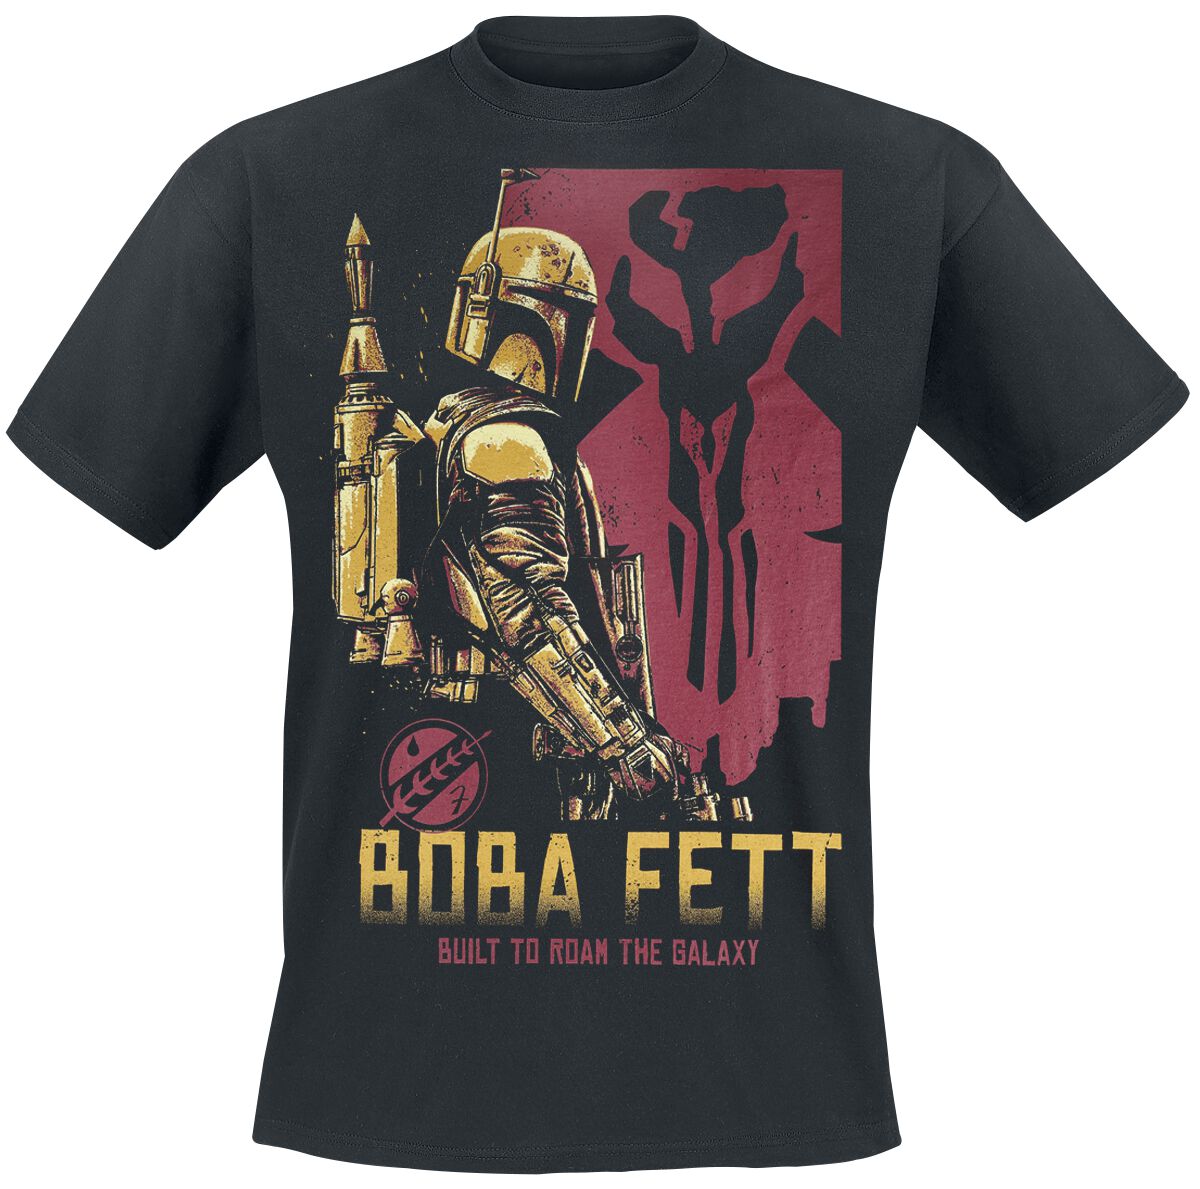 Star Wars The Book Of Boba Fett - Roam The Galaxy T-Shirt schwarz in S